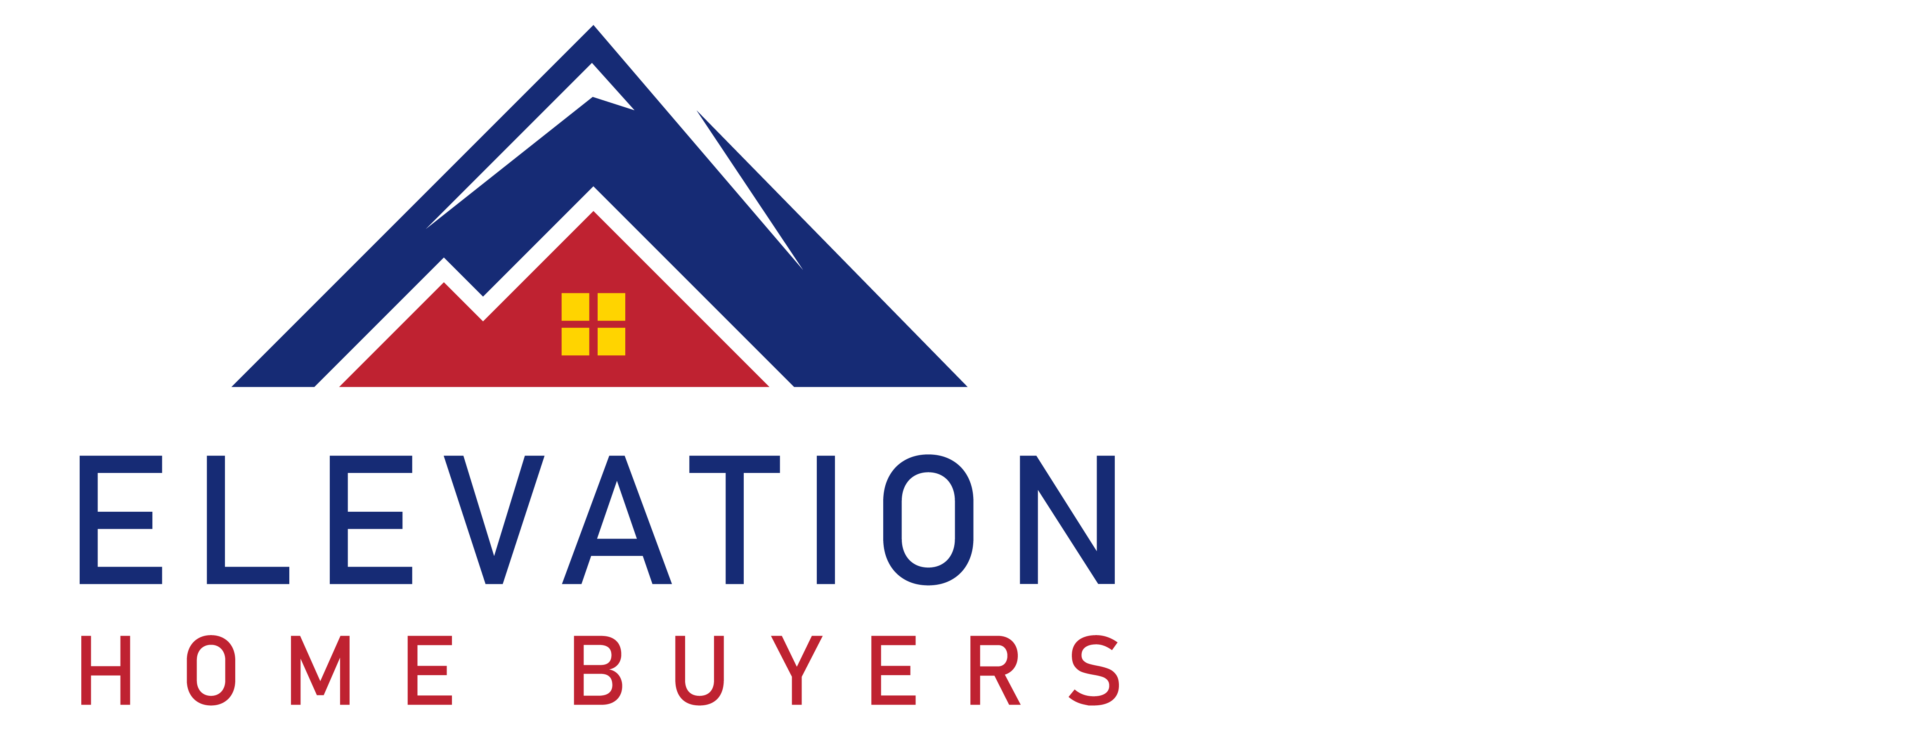 Elevation Home Buyers logo